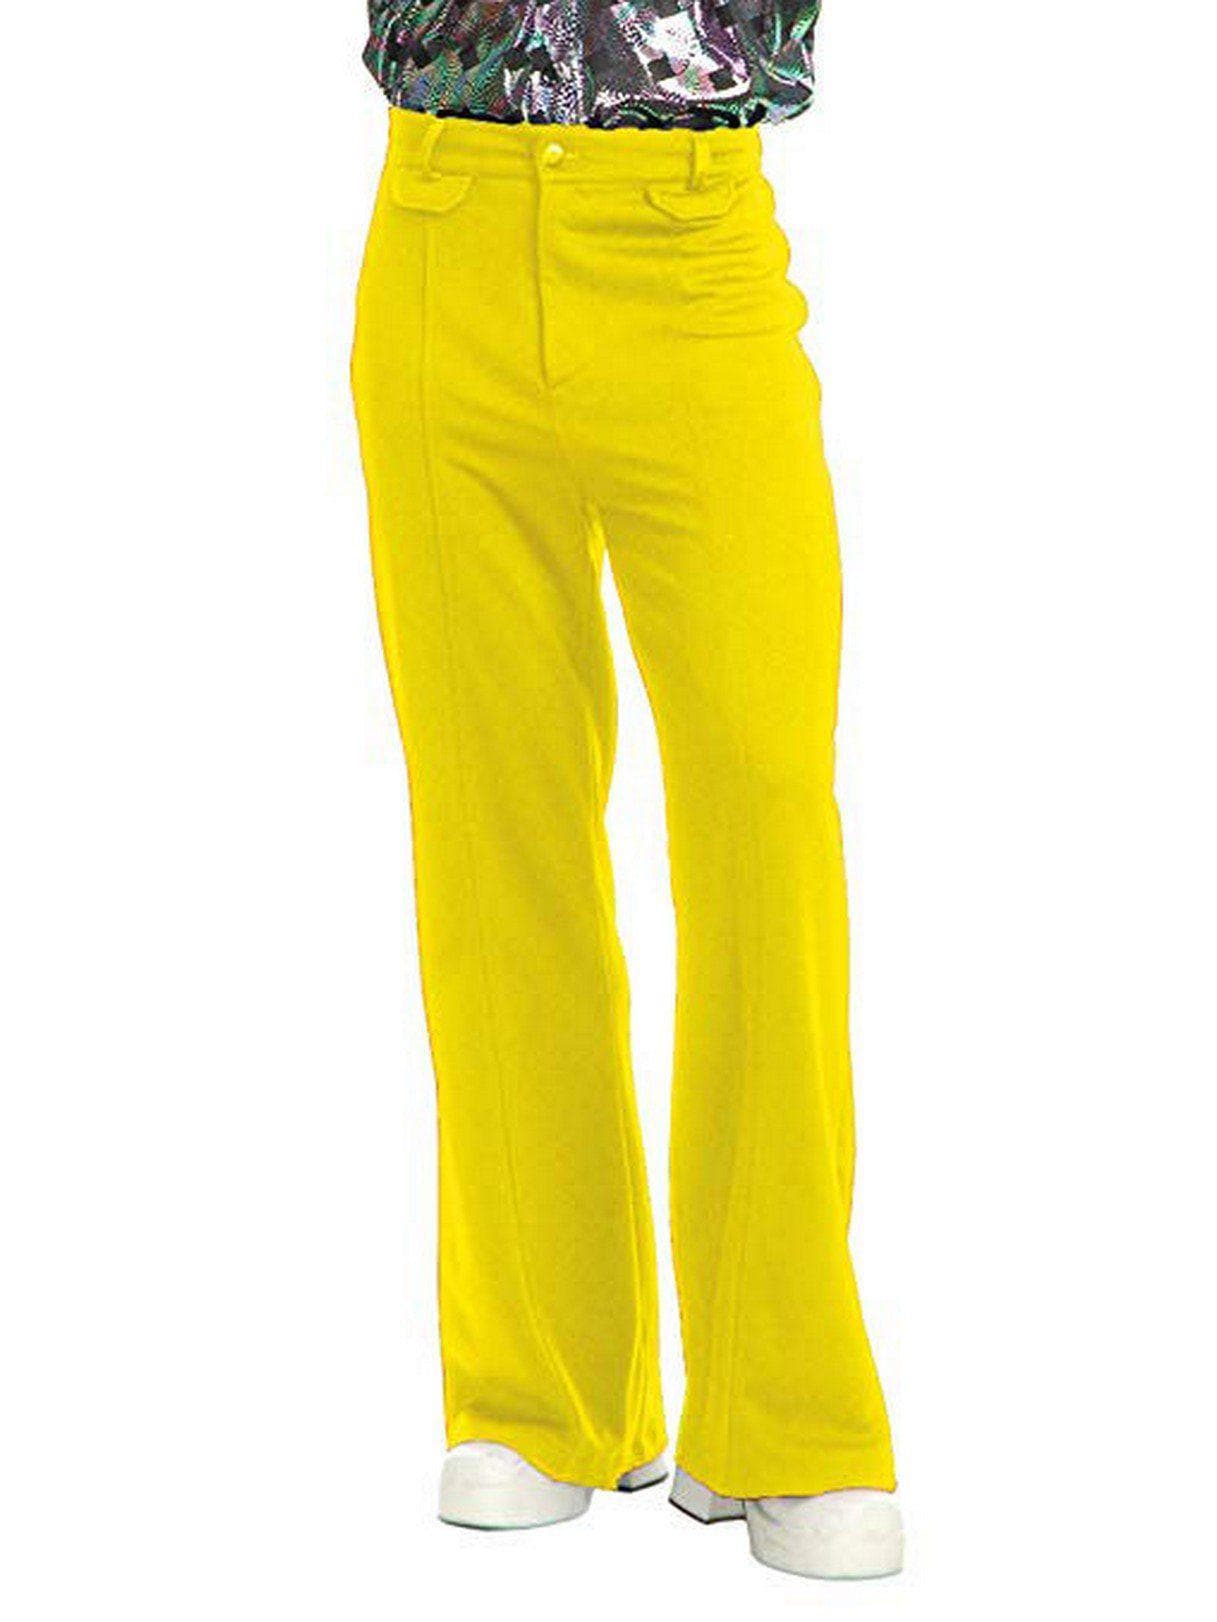 Adult Disco Pants Yellow Costume - costumes.com